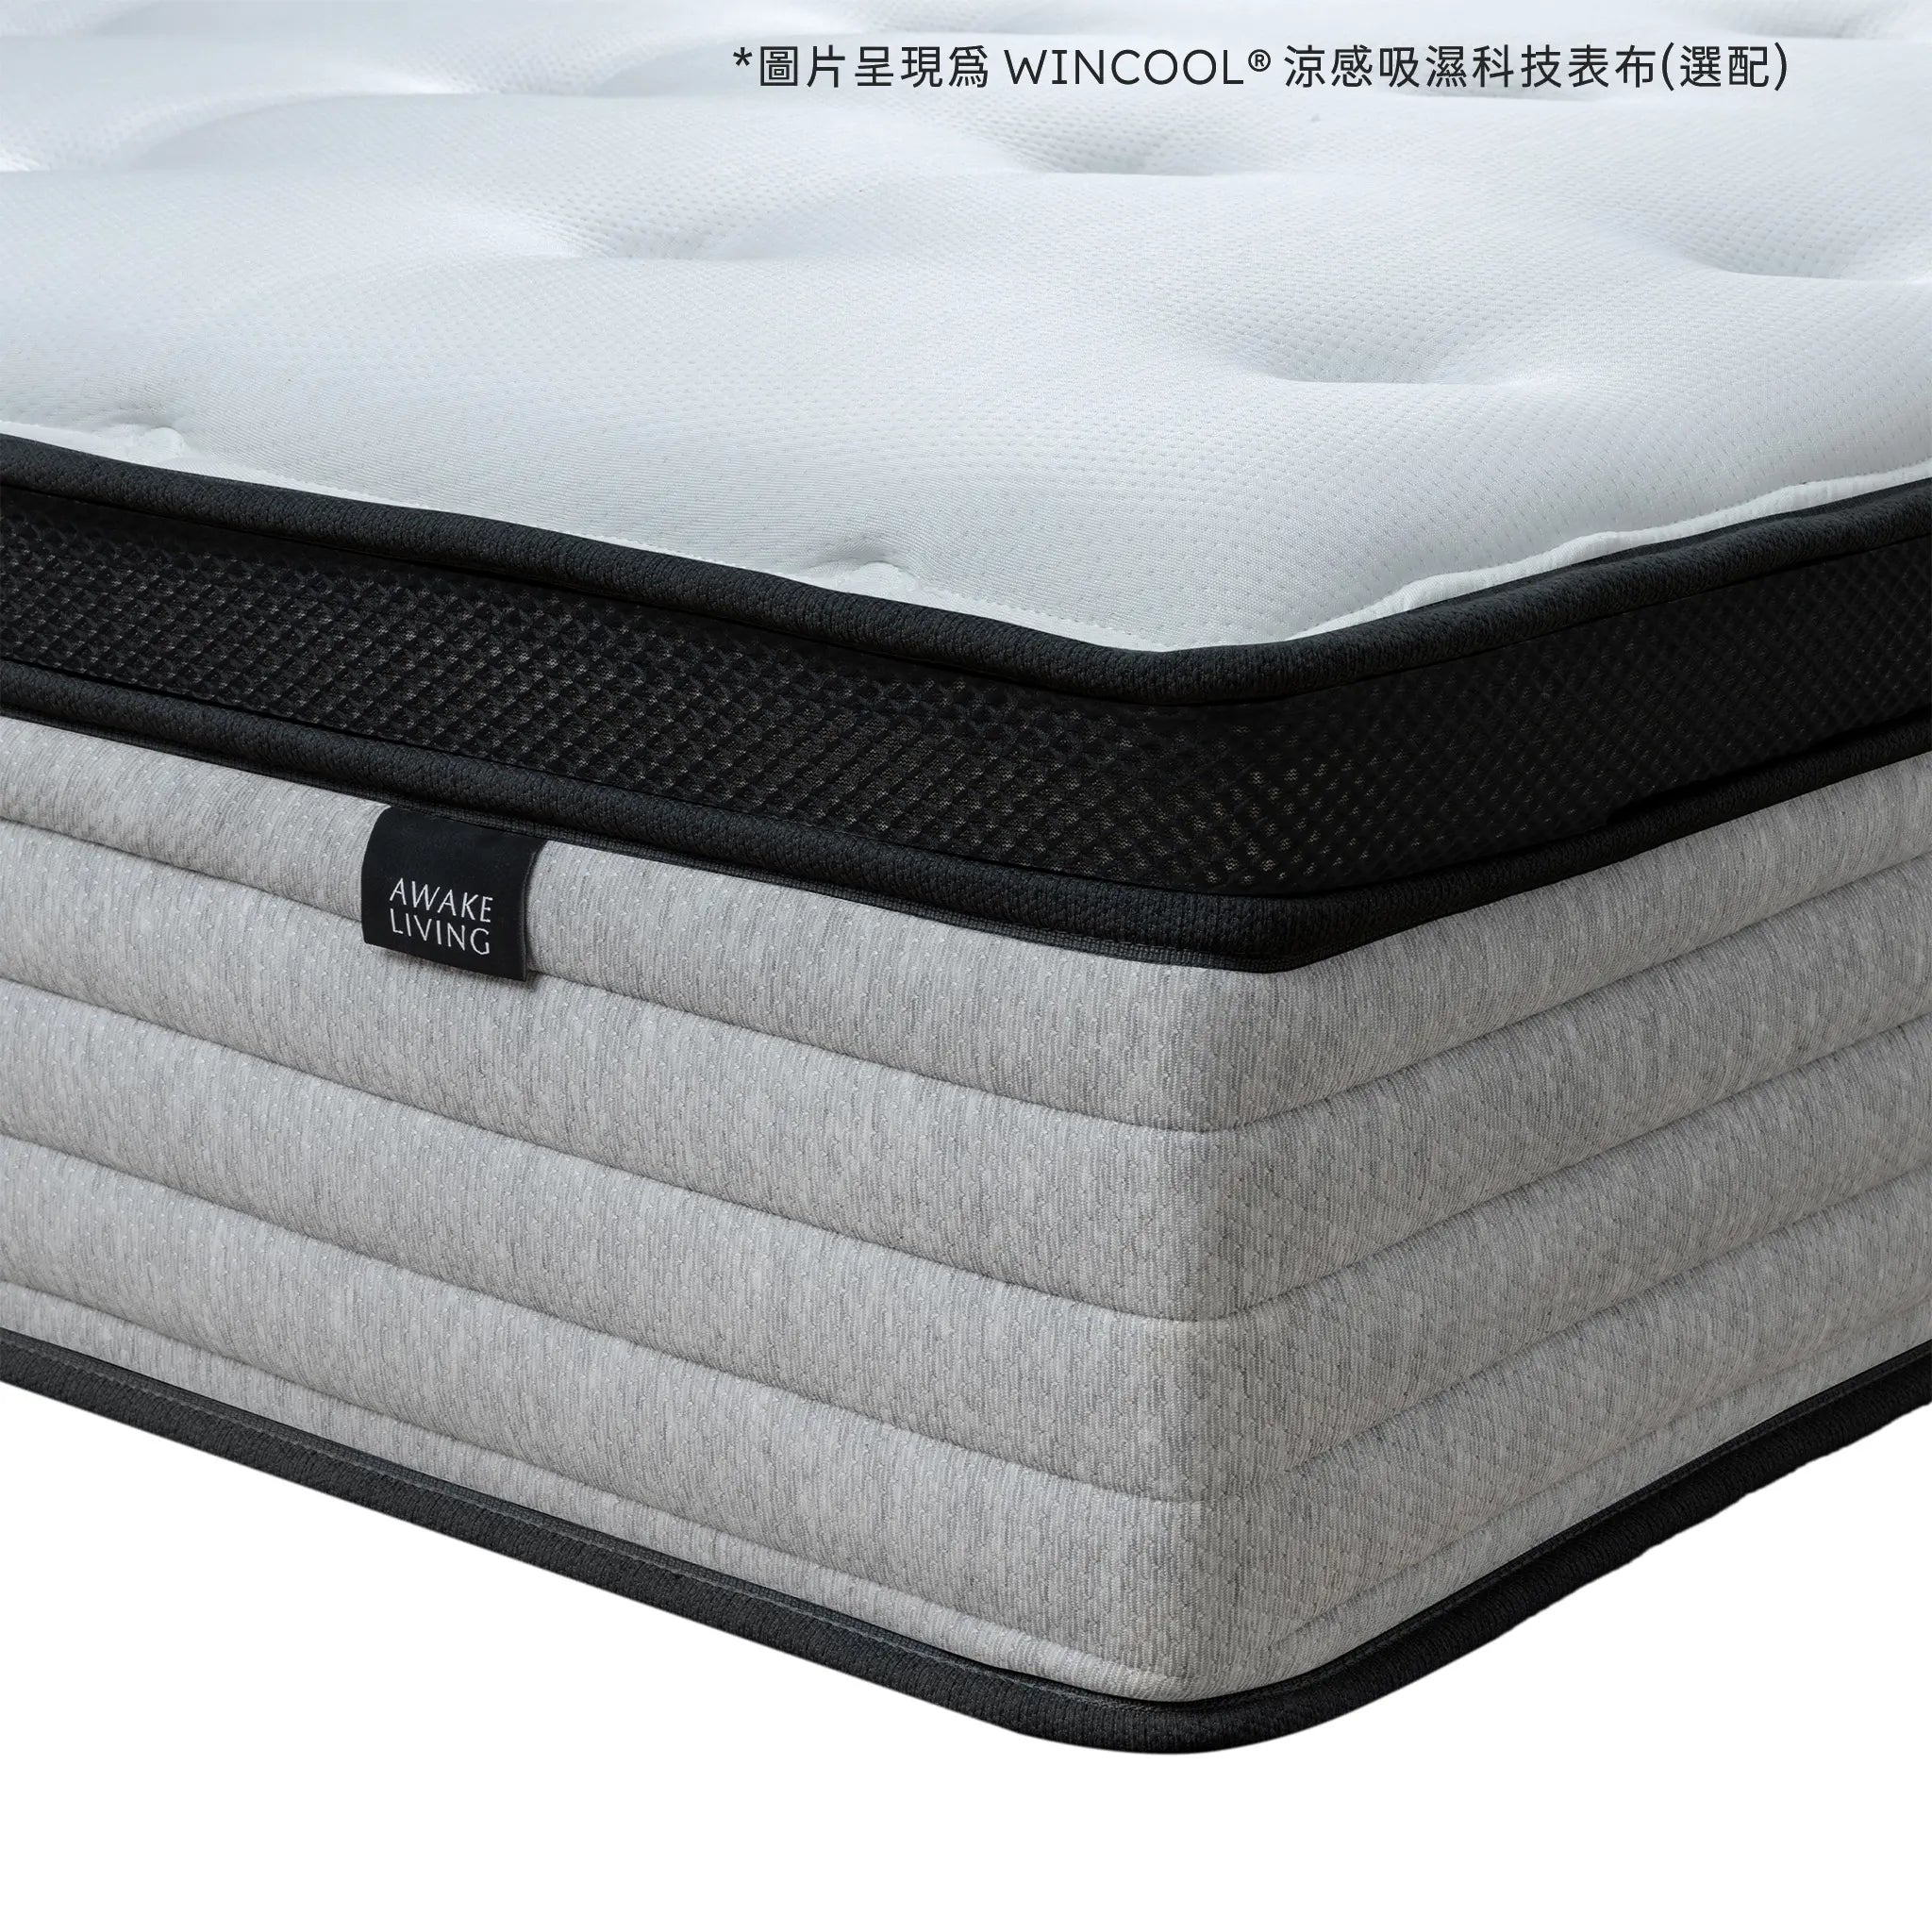 Solid 2.4 護脊安眠高支撐乳膠獨立筒床墊產品照 - 1